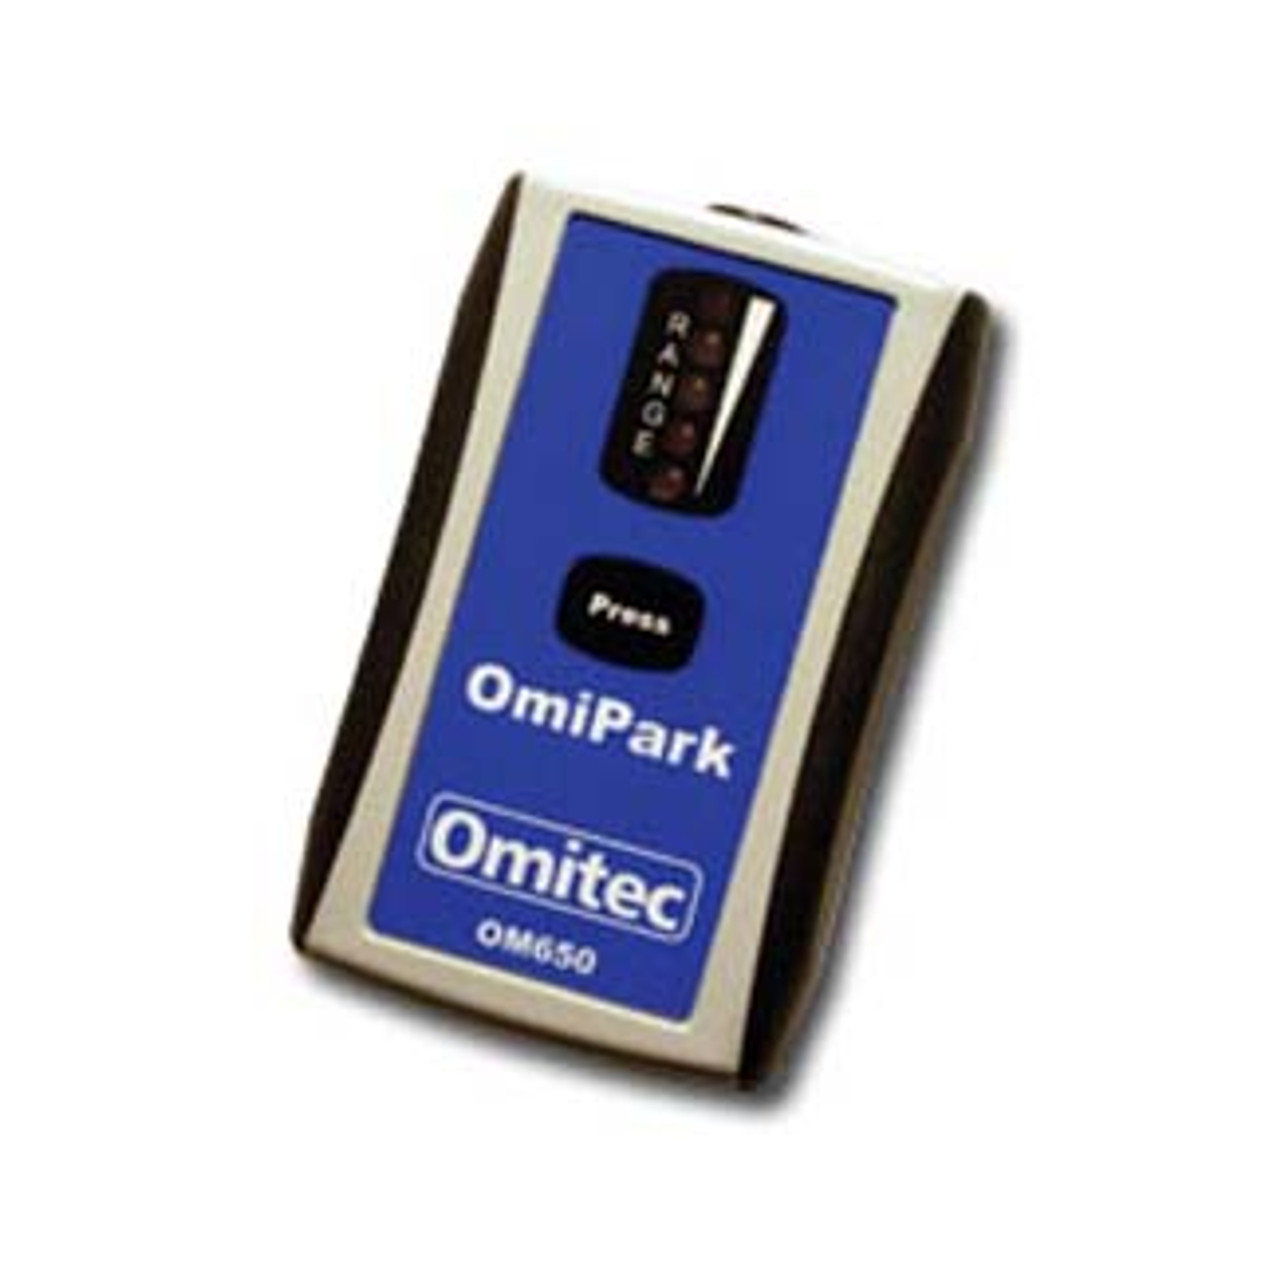 OmiPark - Reverse Parking Sensor Tester (DISCONTINUED)